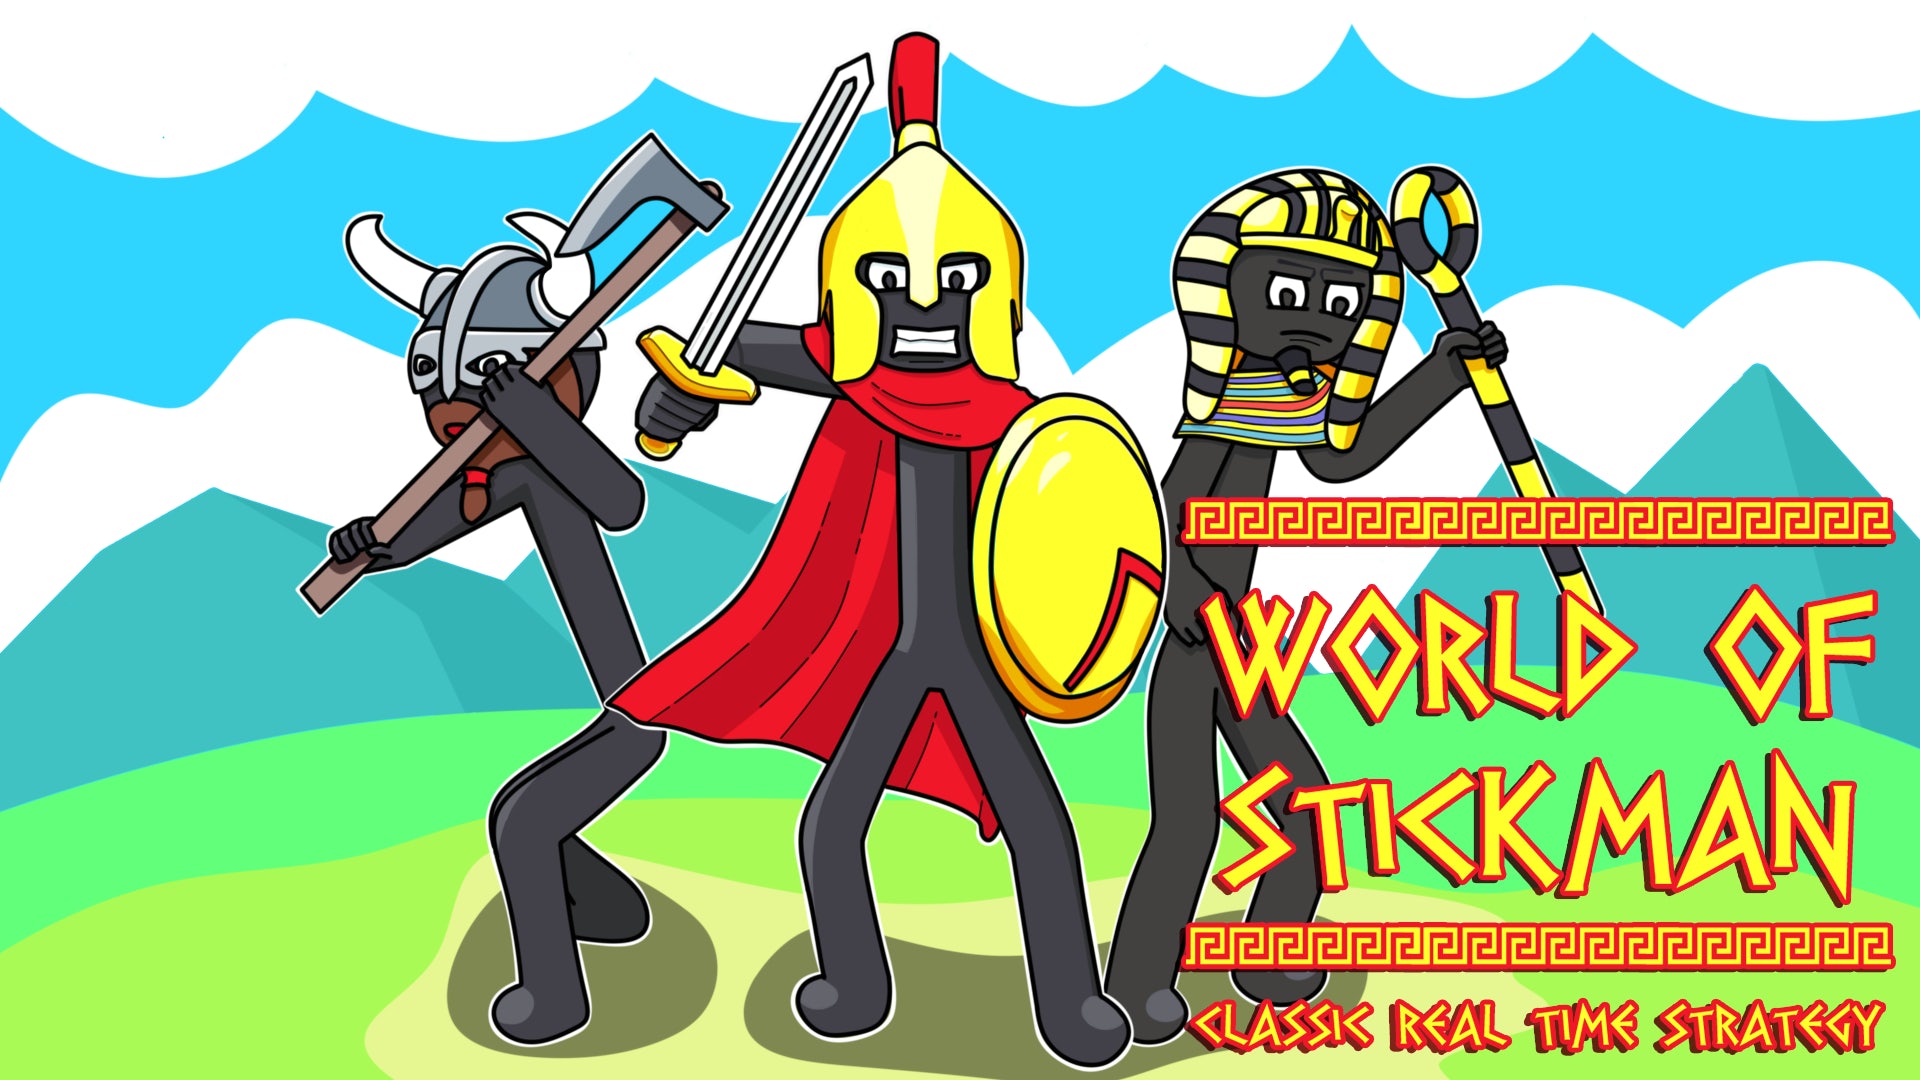 World of Stickman Classic RTS